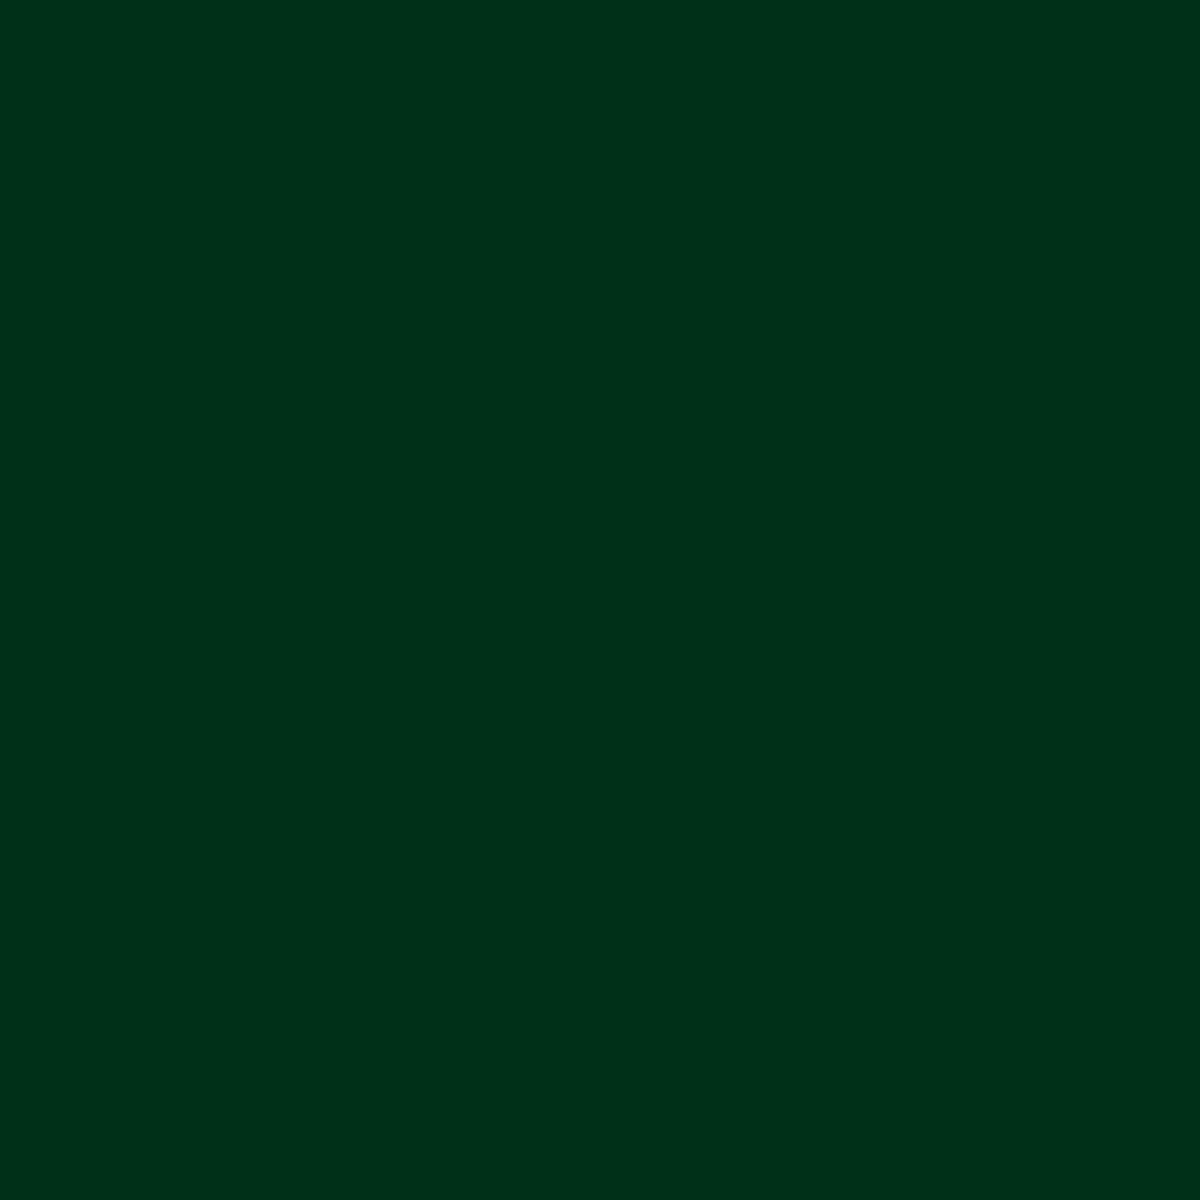 3M Scotchcal pellicola colorata 100-008 verde rana 1,22m x 25m